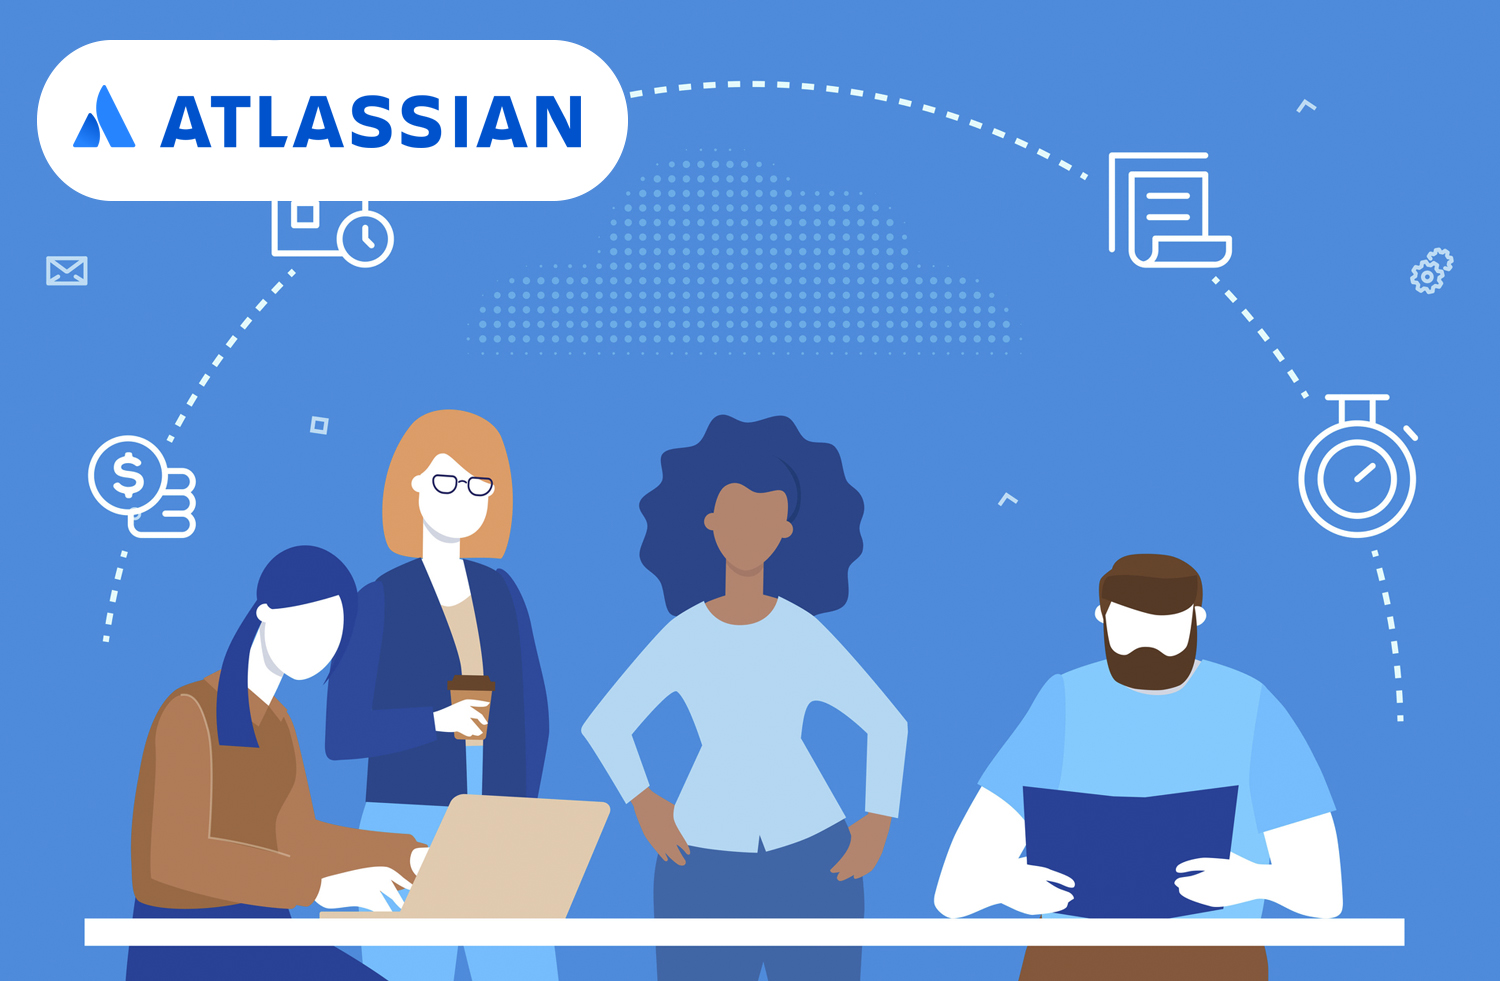 Atlassian case study image